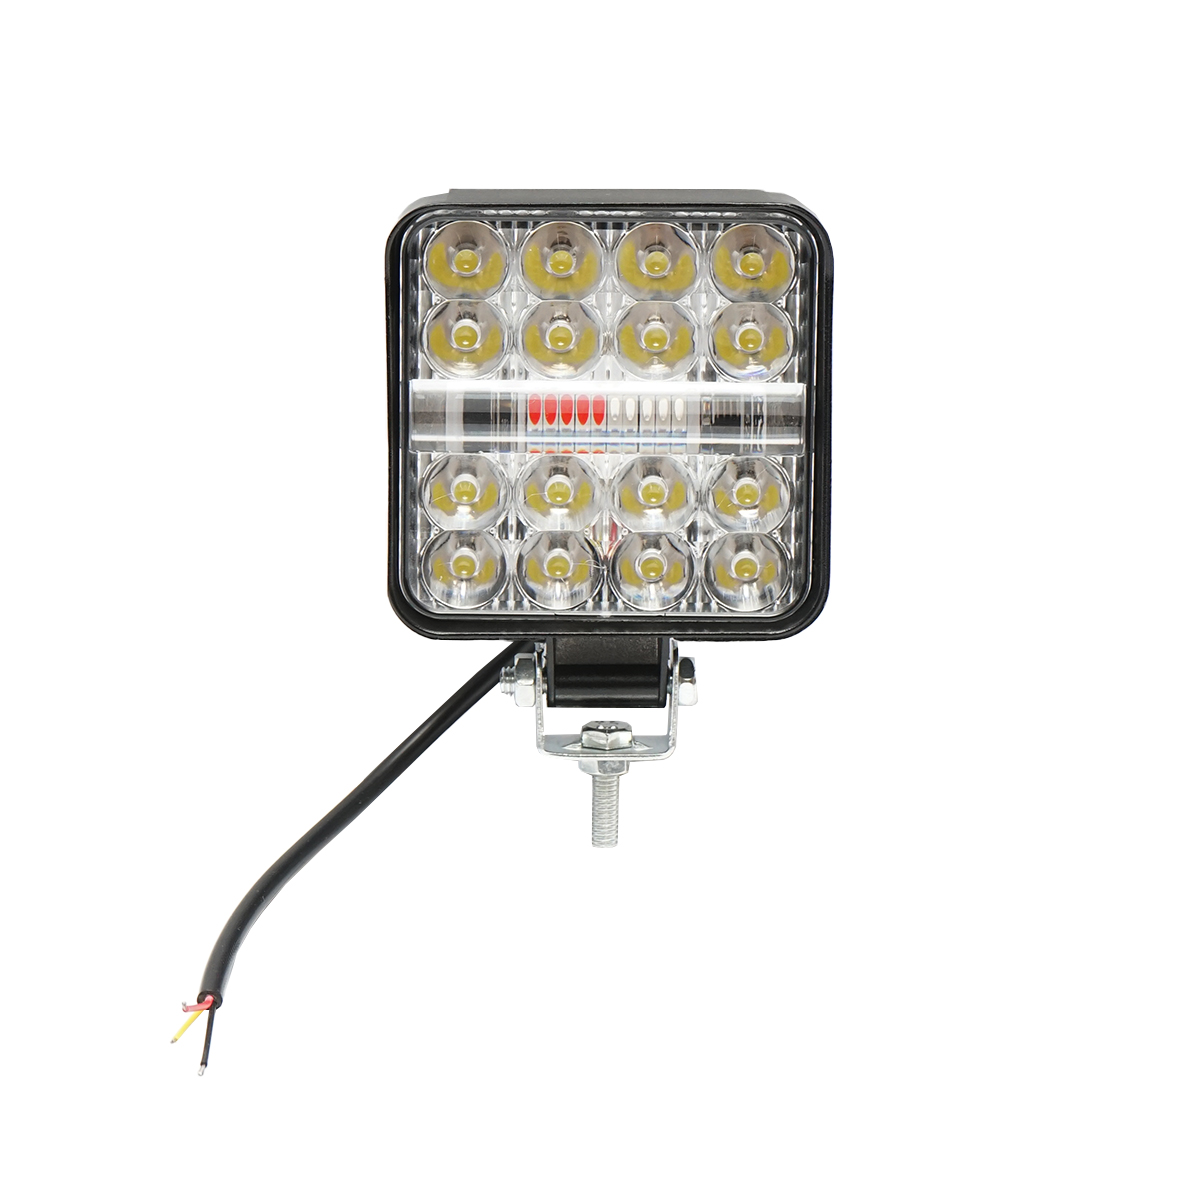 Lampa proiector combinata 26 LED-uri 9-80V 6500K 84x21x84mm IP67 Breckner Germany